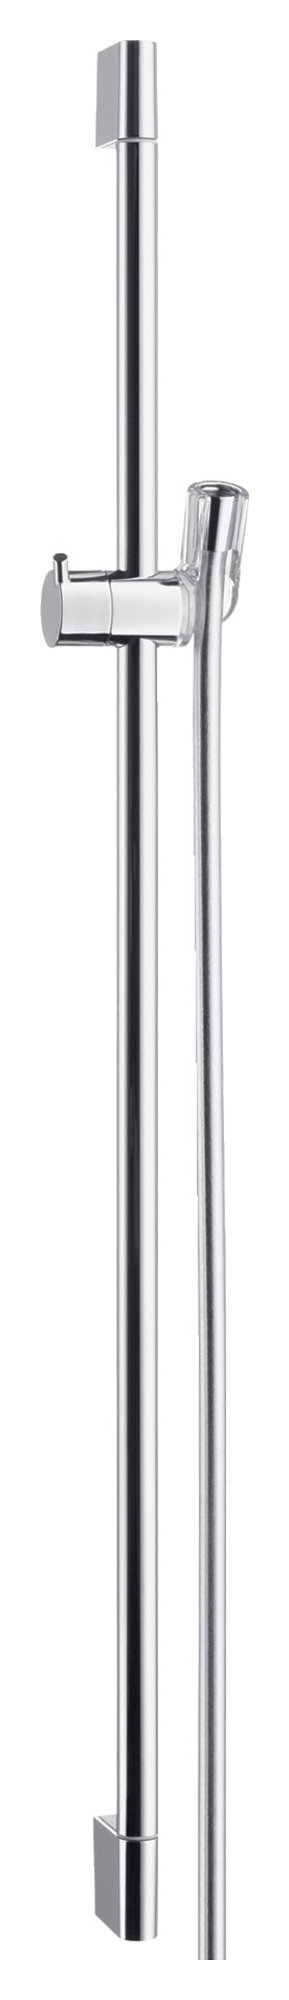 Unica barra de ducha C 90 cm con manguera de ducha, 27610000, cromada - 27610000 - Hansgrohe